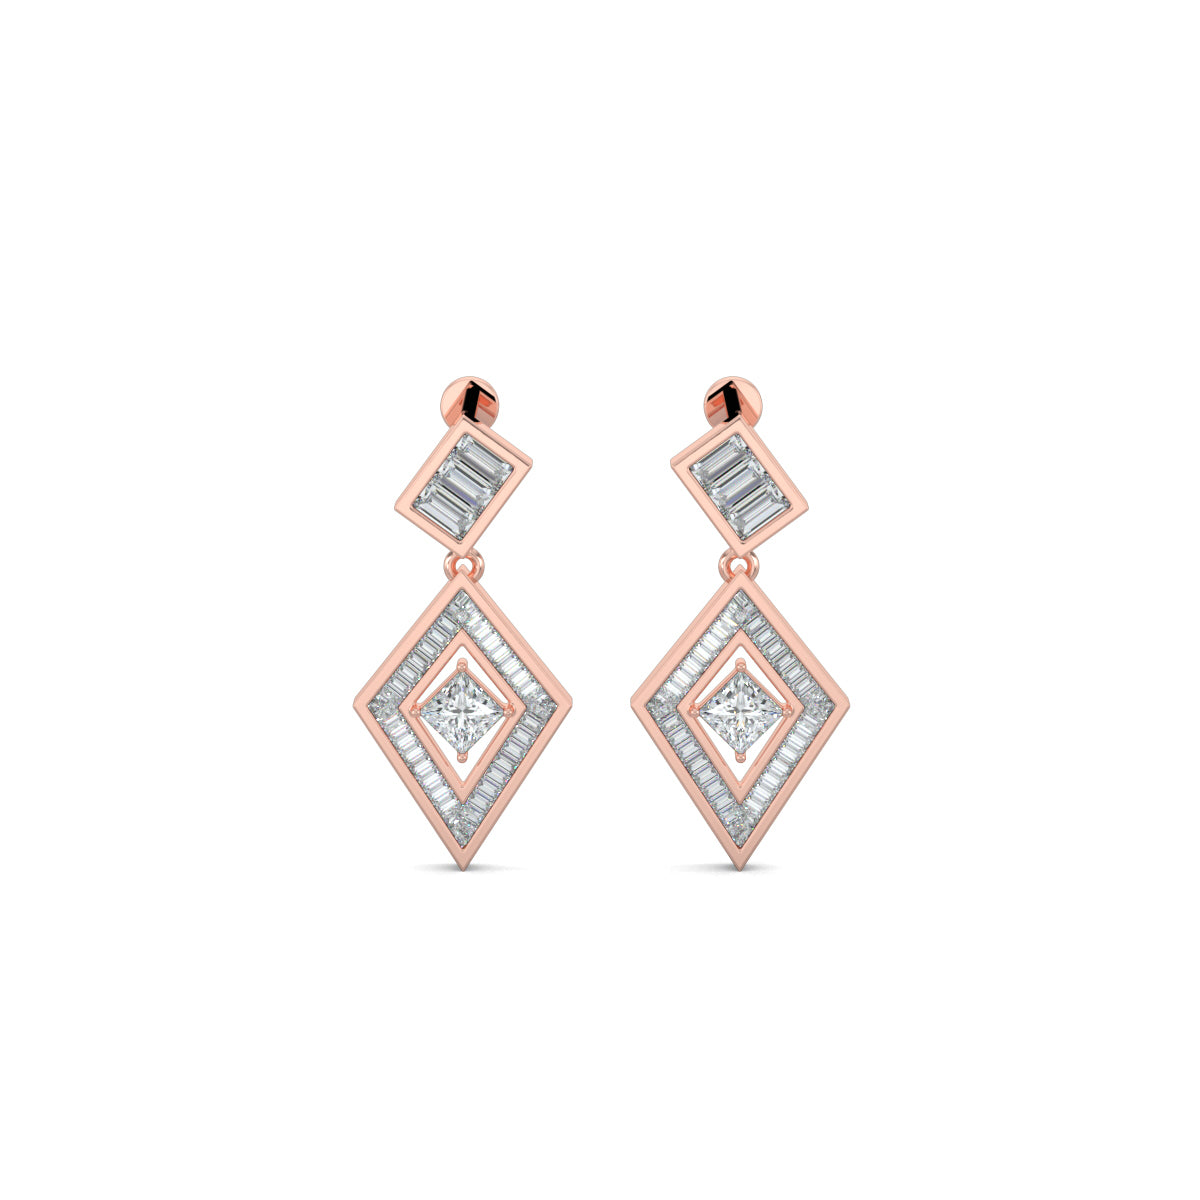 Rose Gold, Diamond Earrings, Natural diamond earrings, Lab-grown diamond earrings, PrismKite Earrings, Mid-length diamond earrings, Baguette-cut diamonds, Princess-cut diamond, Kite-shaped earrings, Modern diamond jewelry, Contemporary earrings, Luxury diamond earrings.